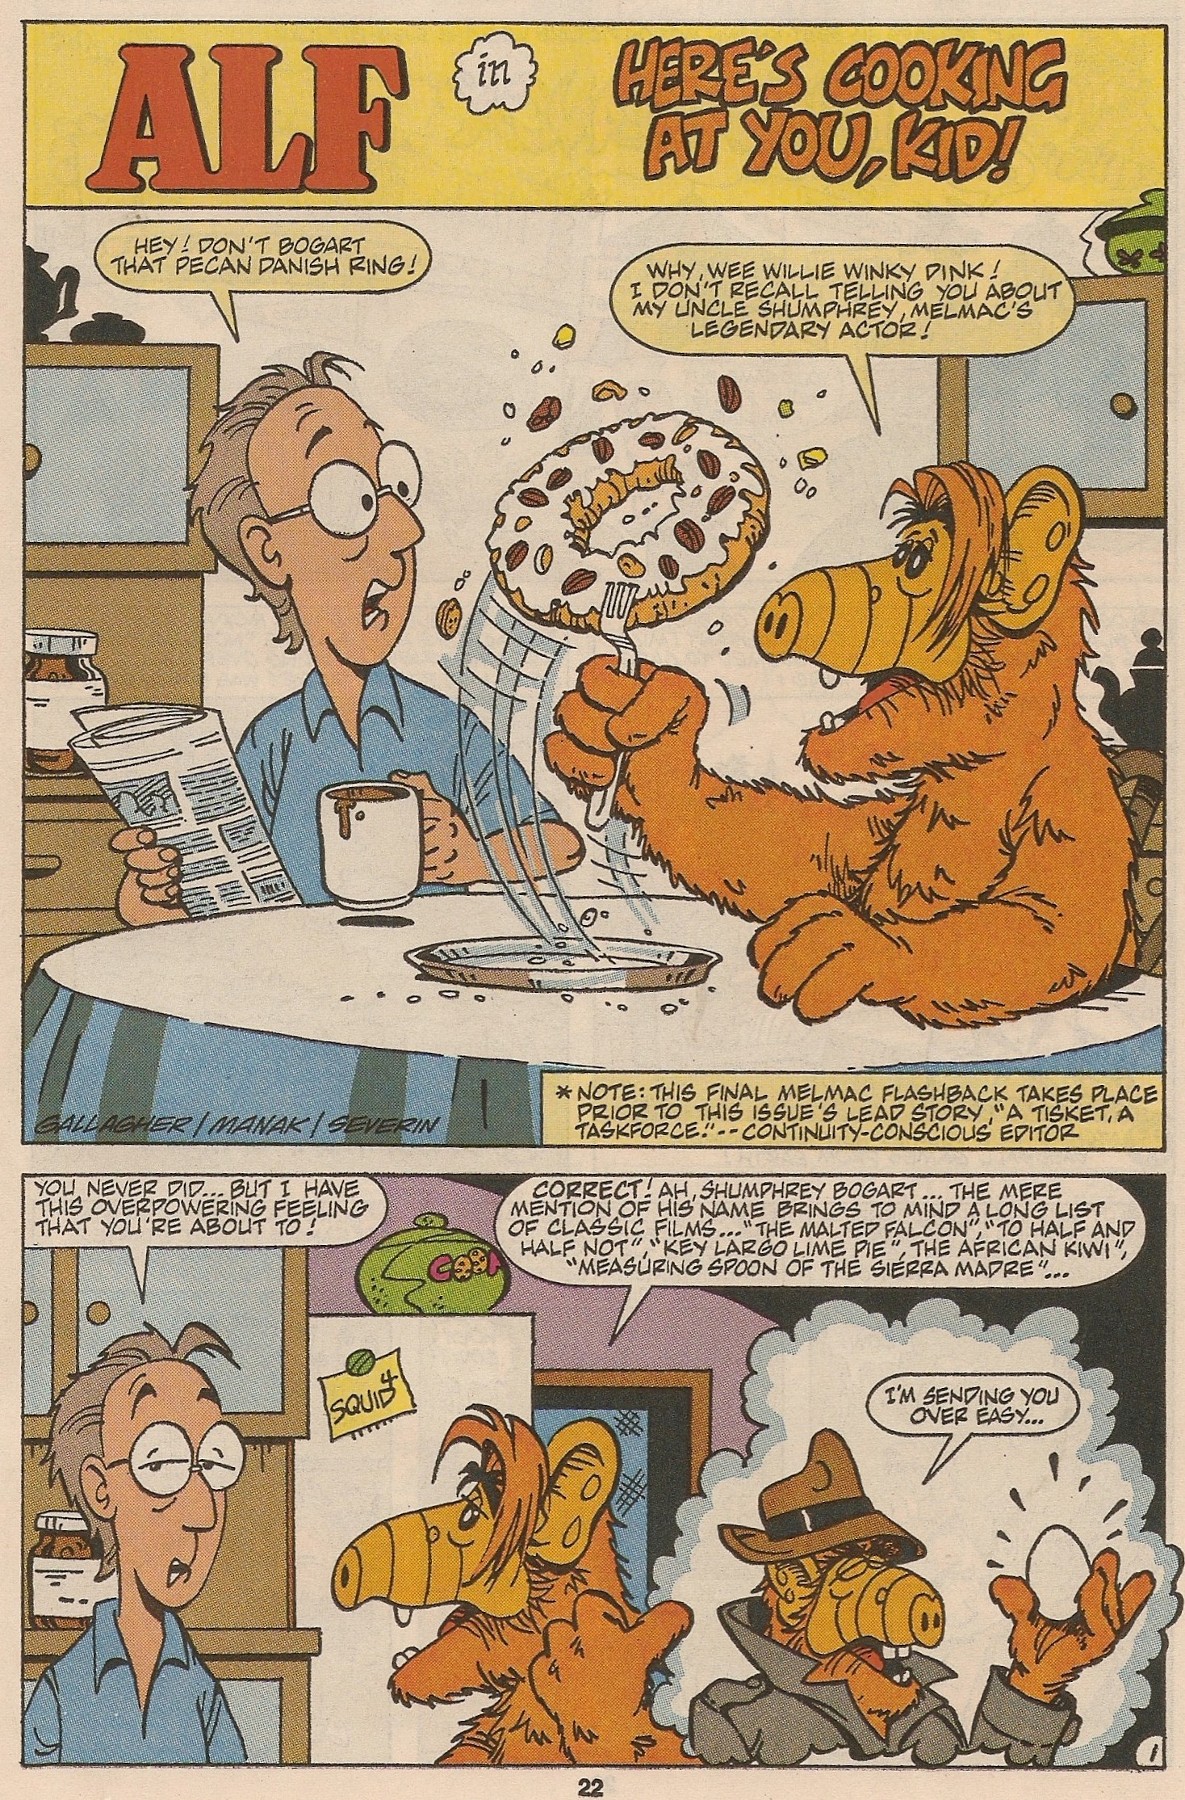 Alf 17 (Marvel Comics) - ComicBookRealm.com